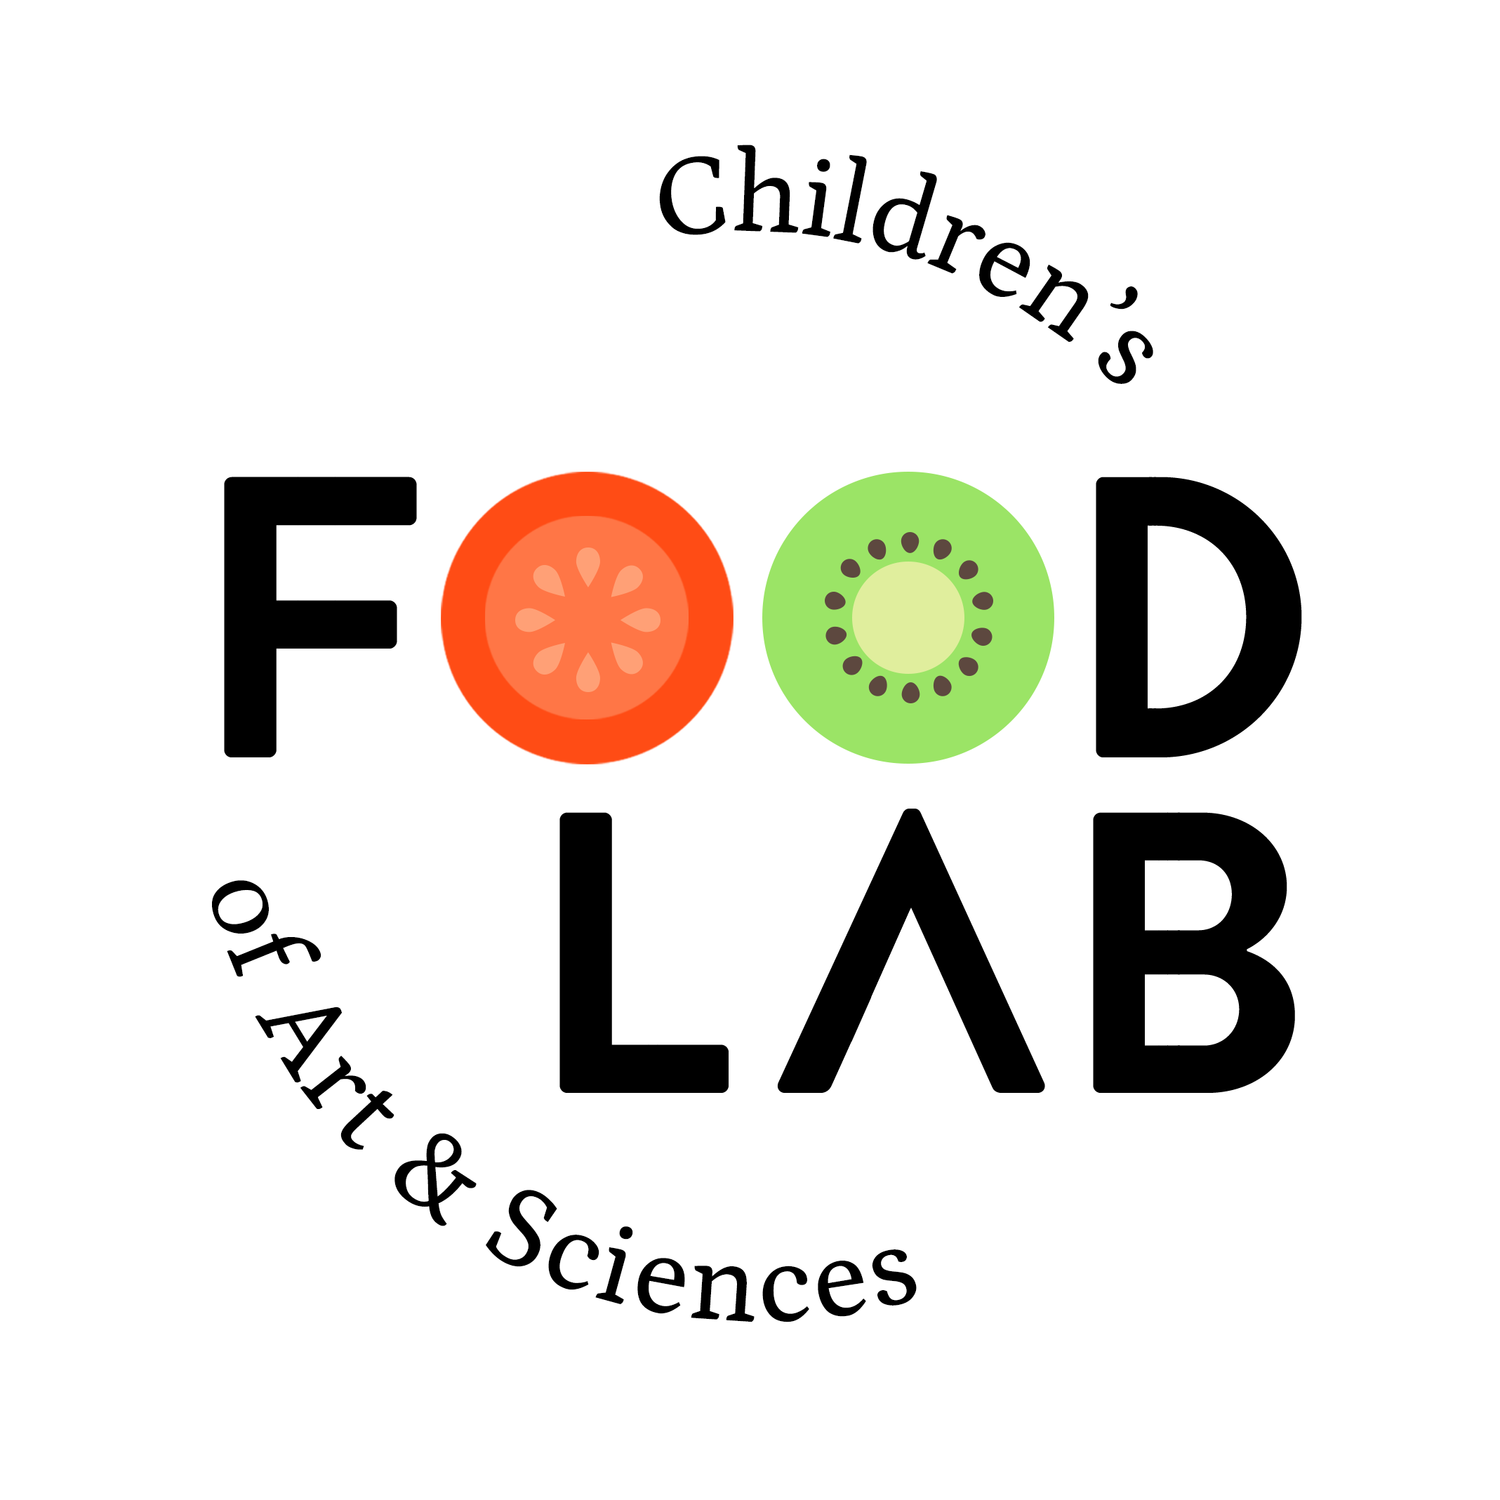 The Children's Food Lab